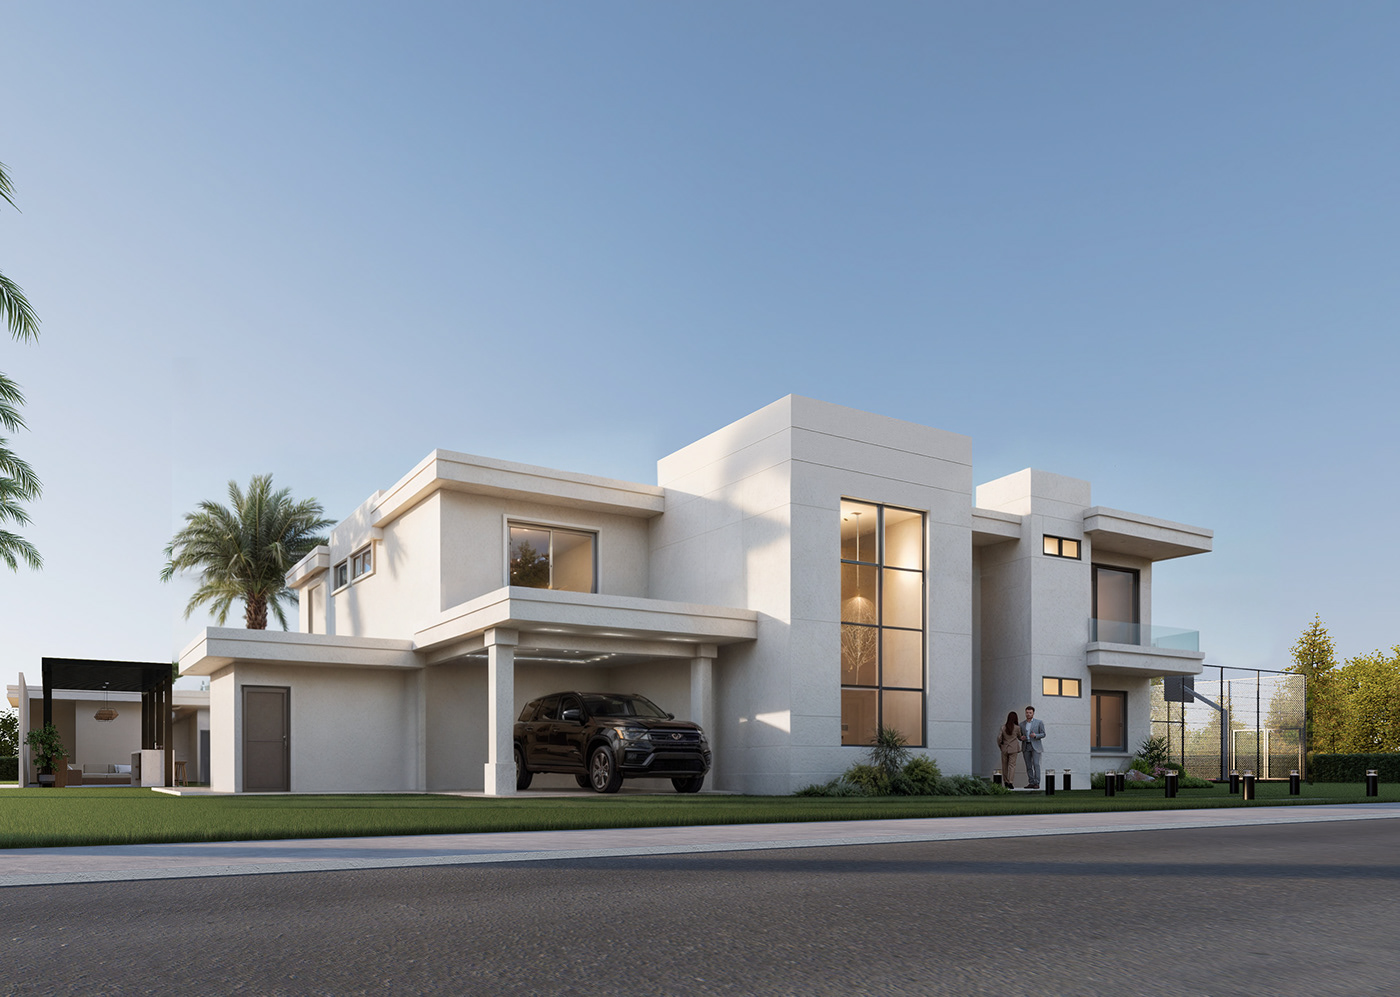 house architecture visualization archviz modern revit D5 Render design Render exterior